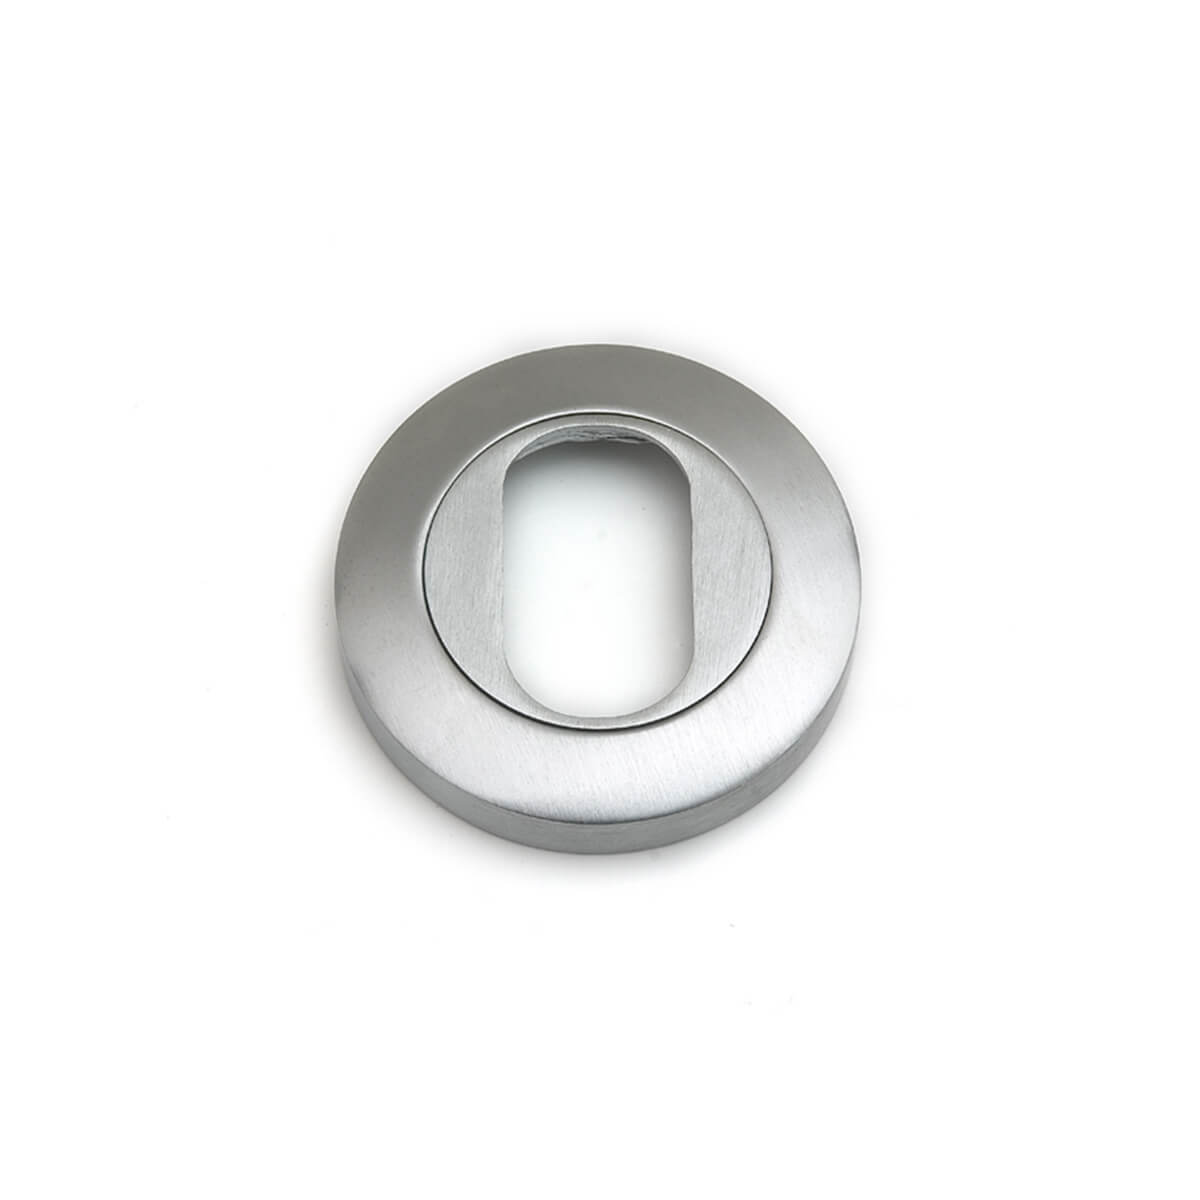 53mm Round Oval Escutcheon - Satin Stainless Steel